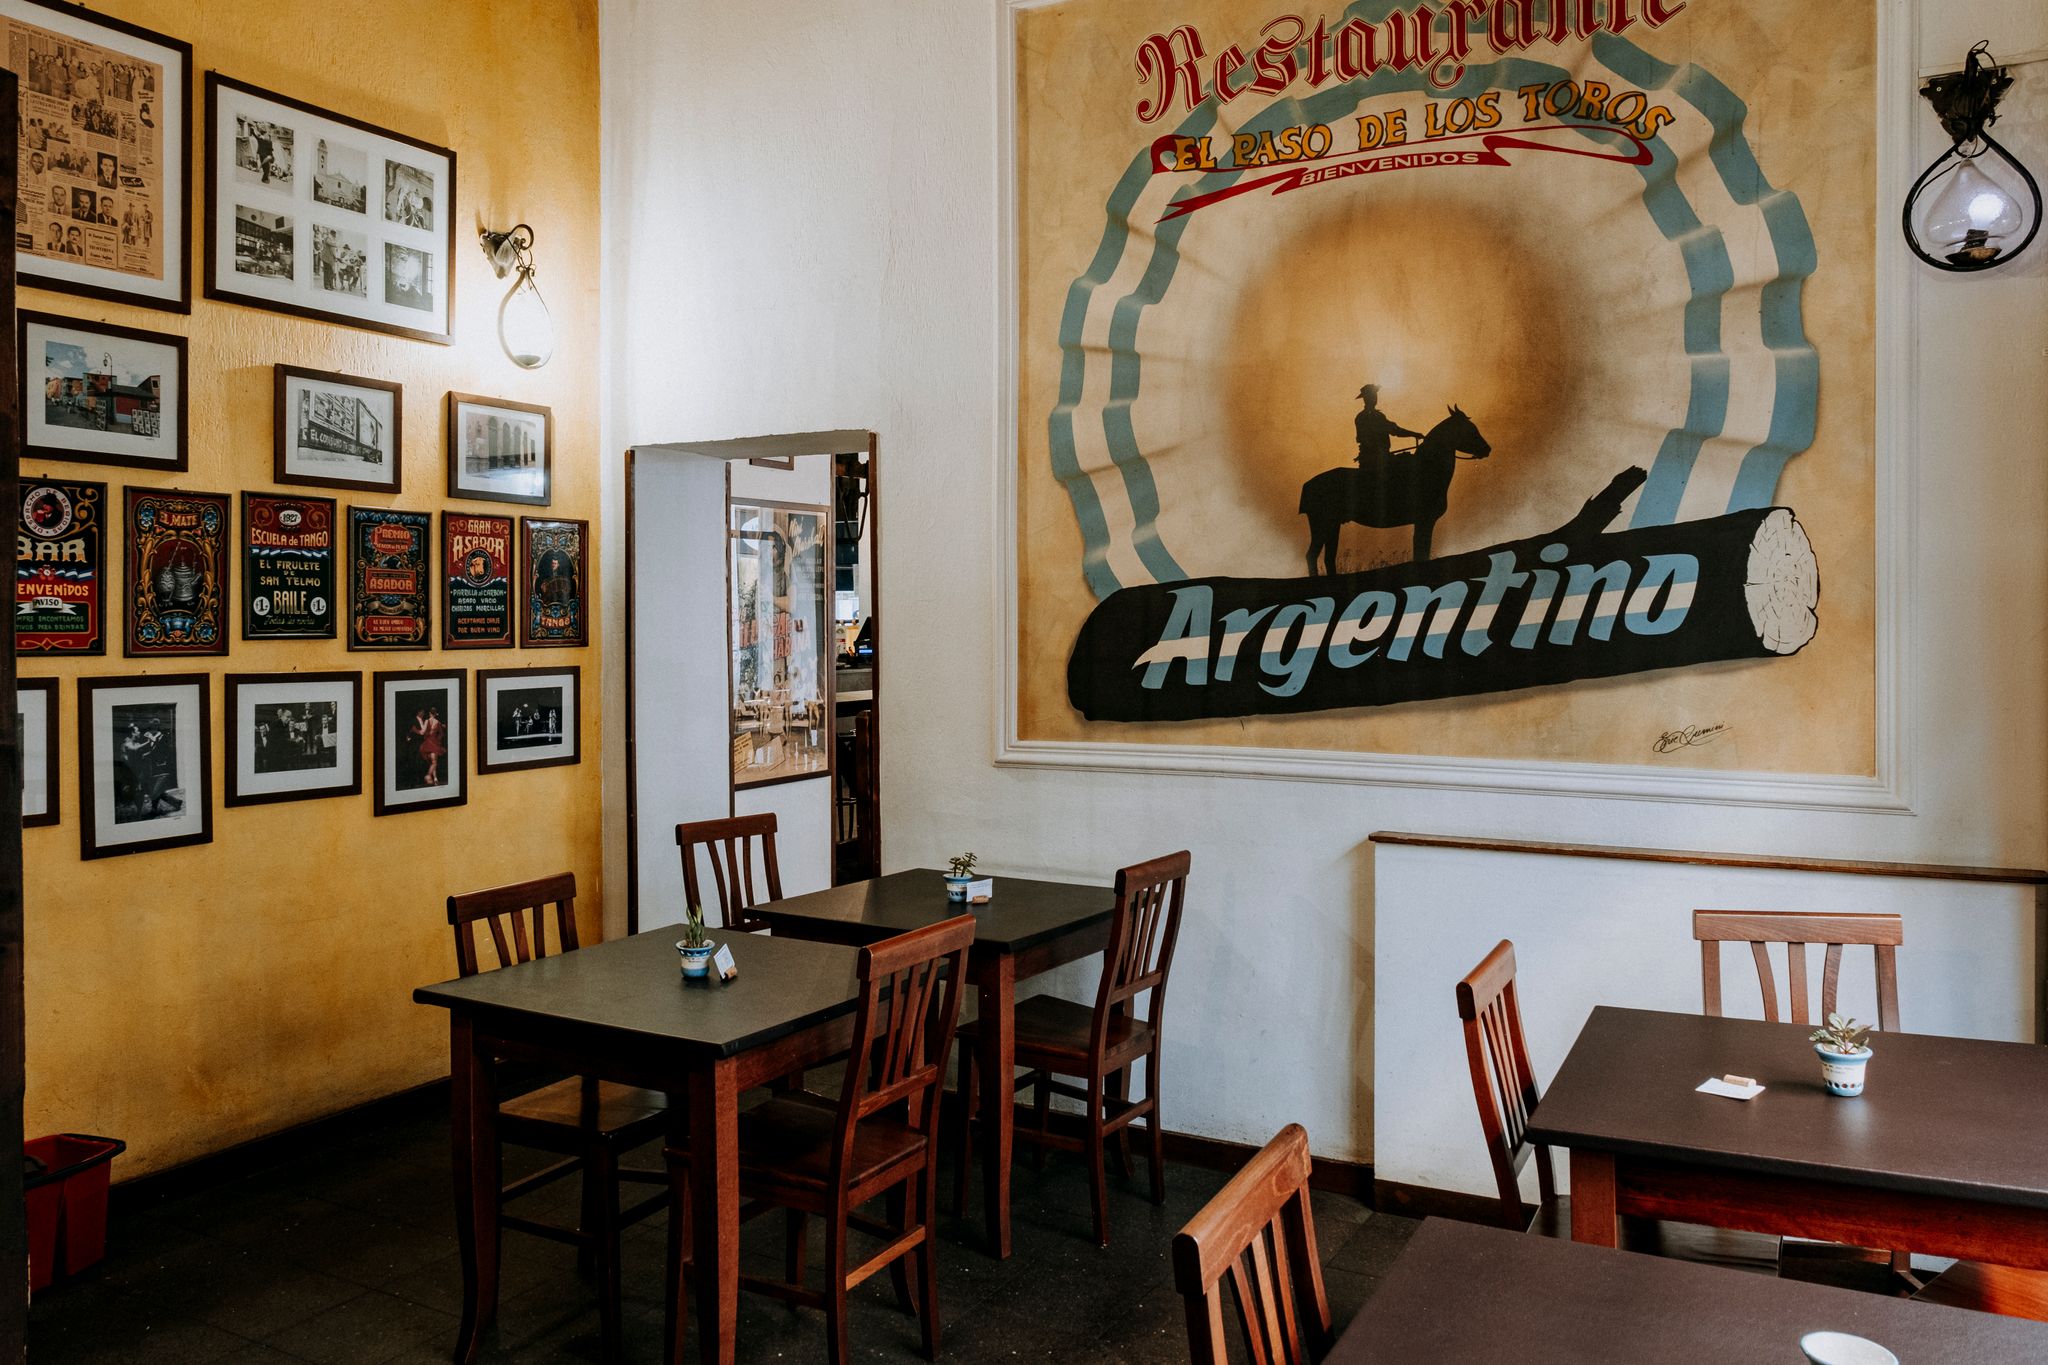 El Paso de Los Toros il ristorante argentino piu longevo di Milano